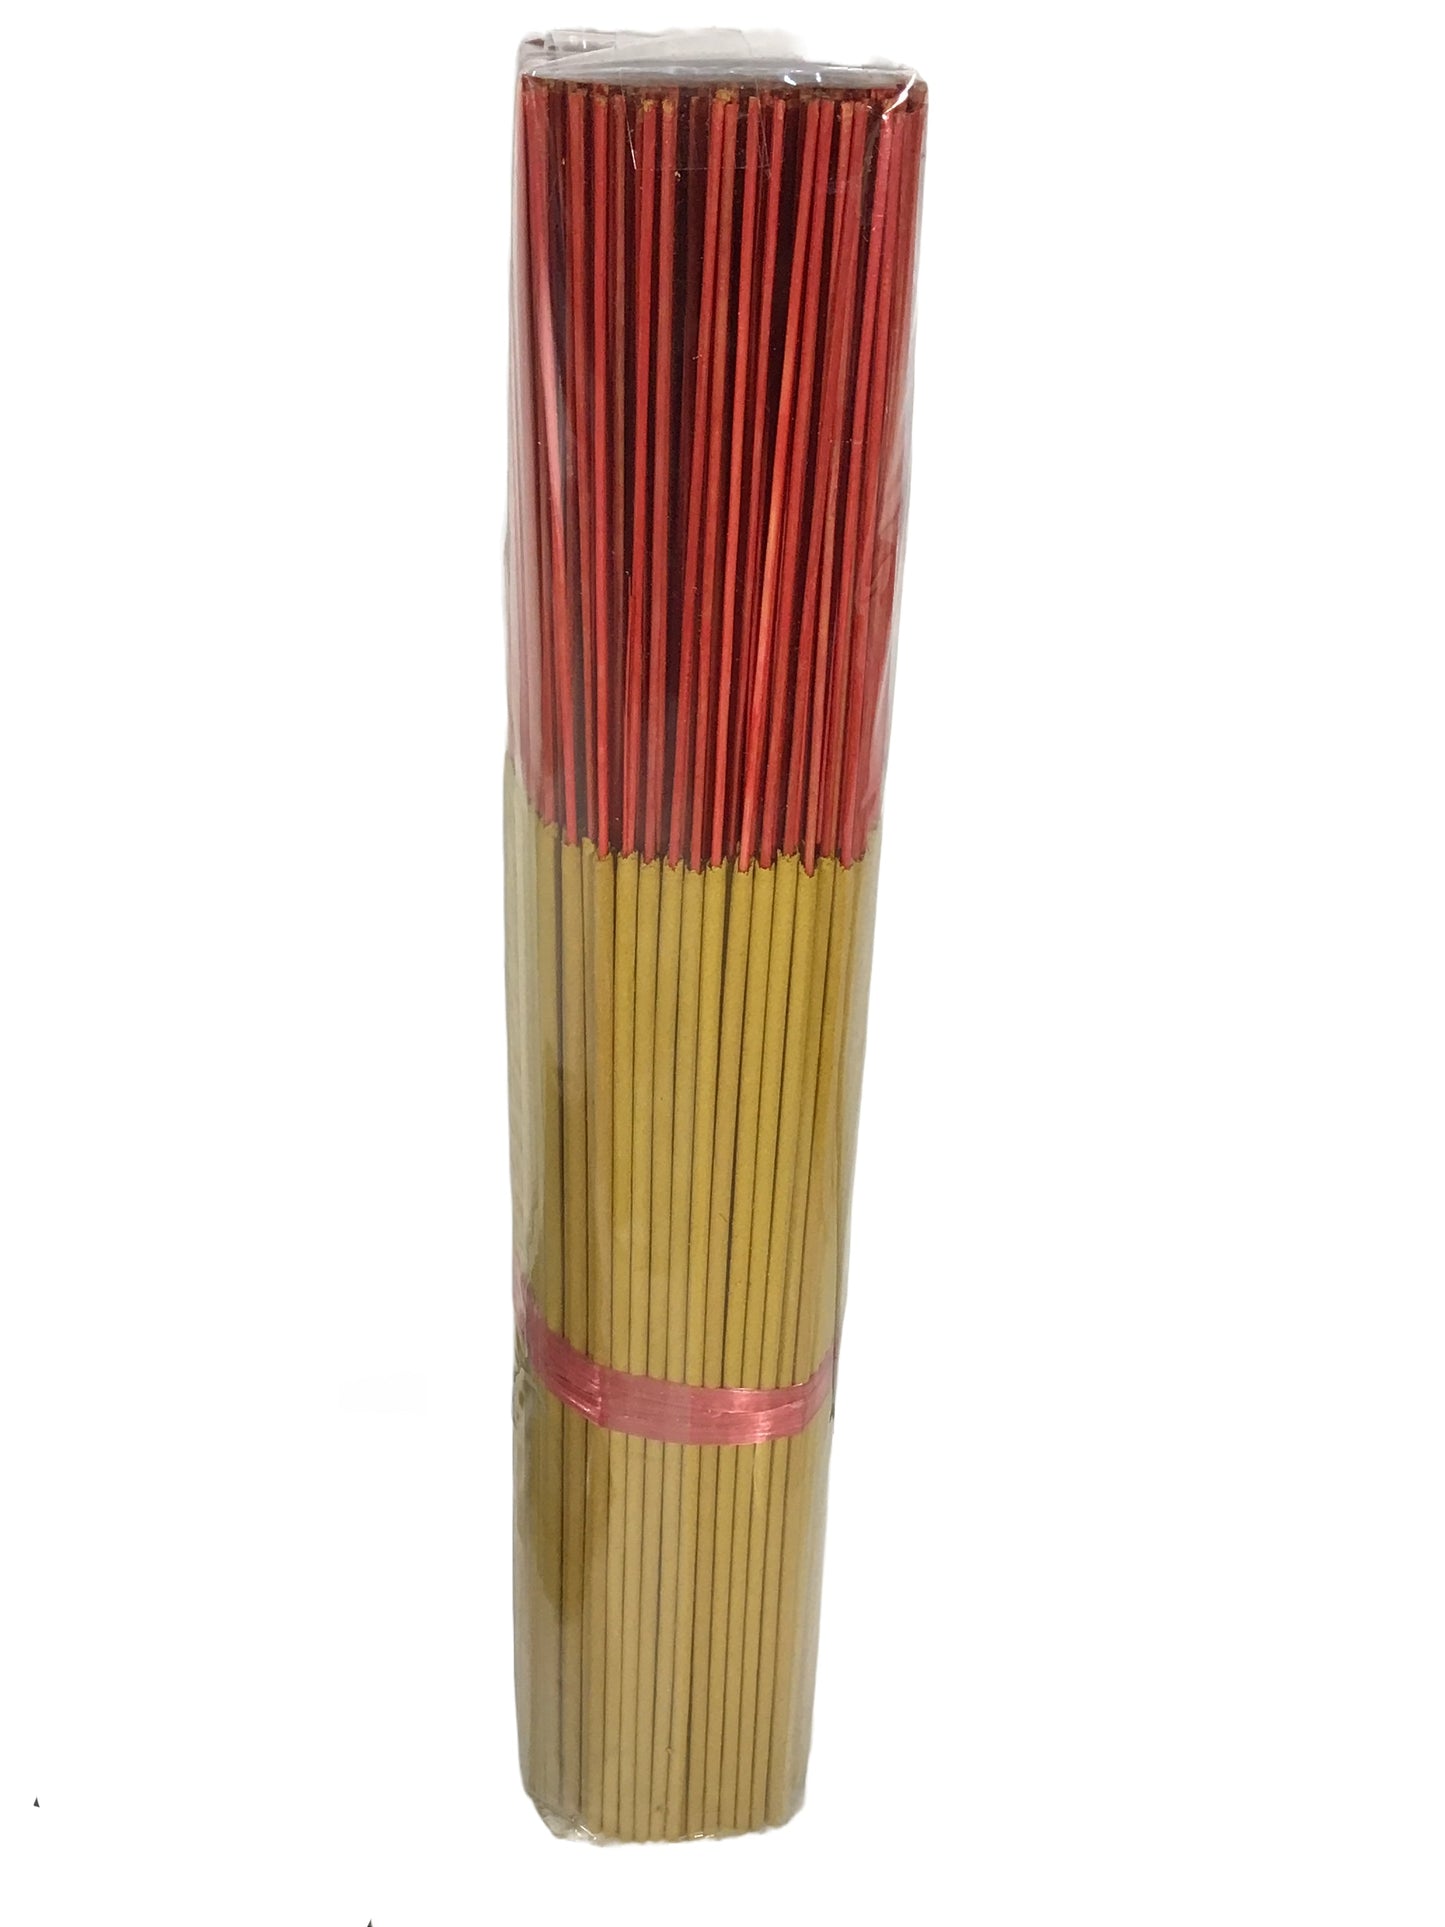 32.7cm Long Incense Sticks for the Goddess - About 400 Sticks 雙鯉牌 仙女千枝檀香